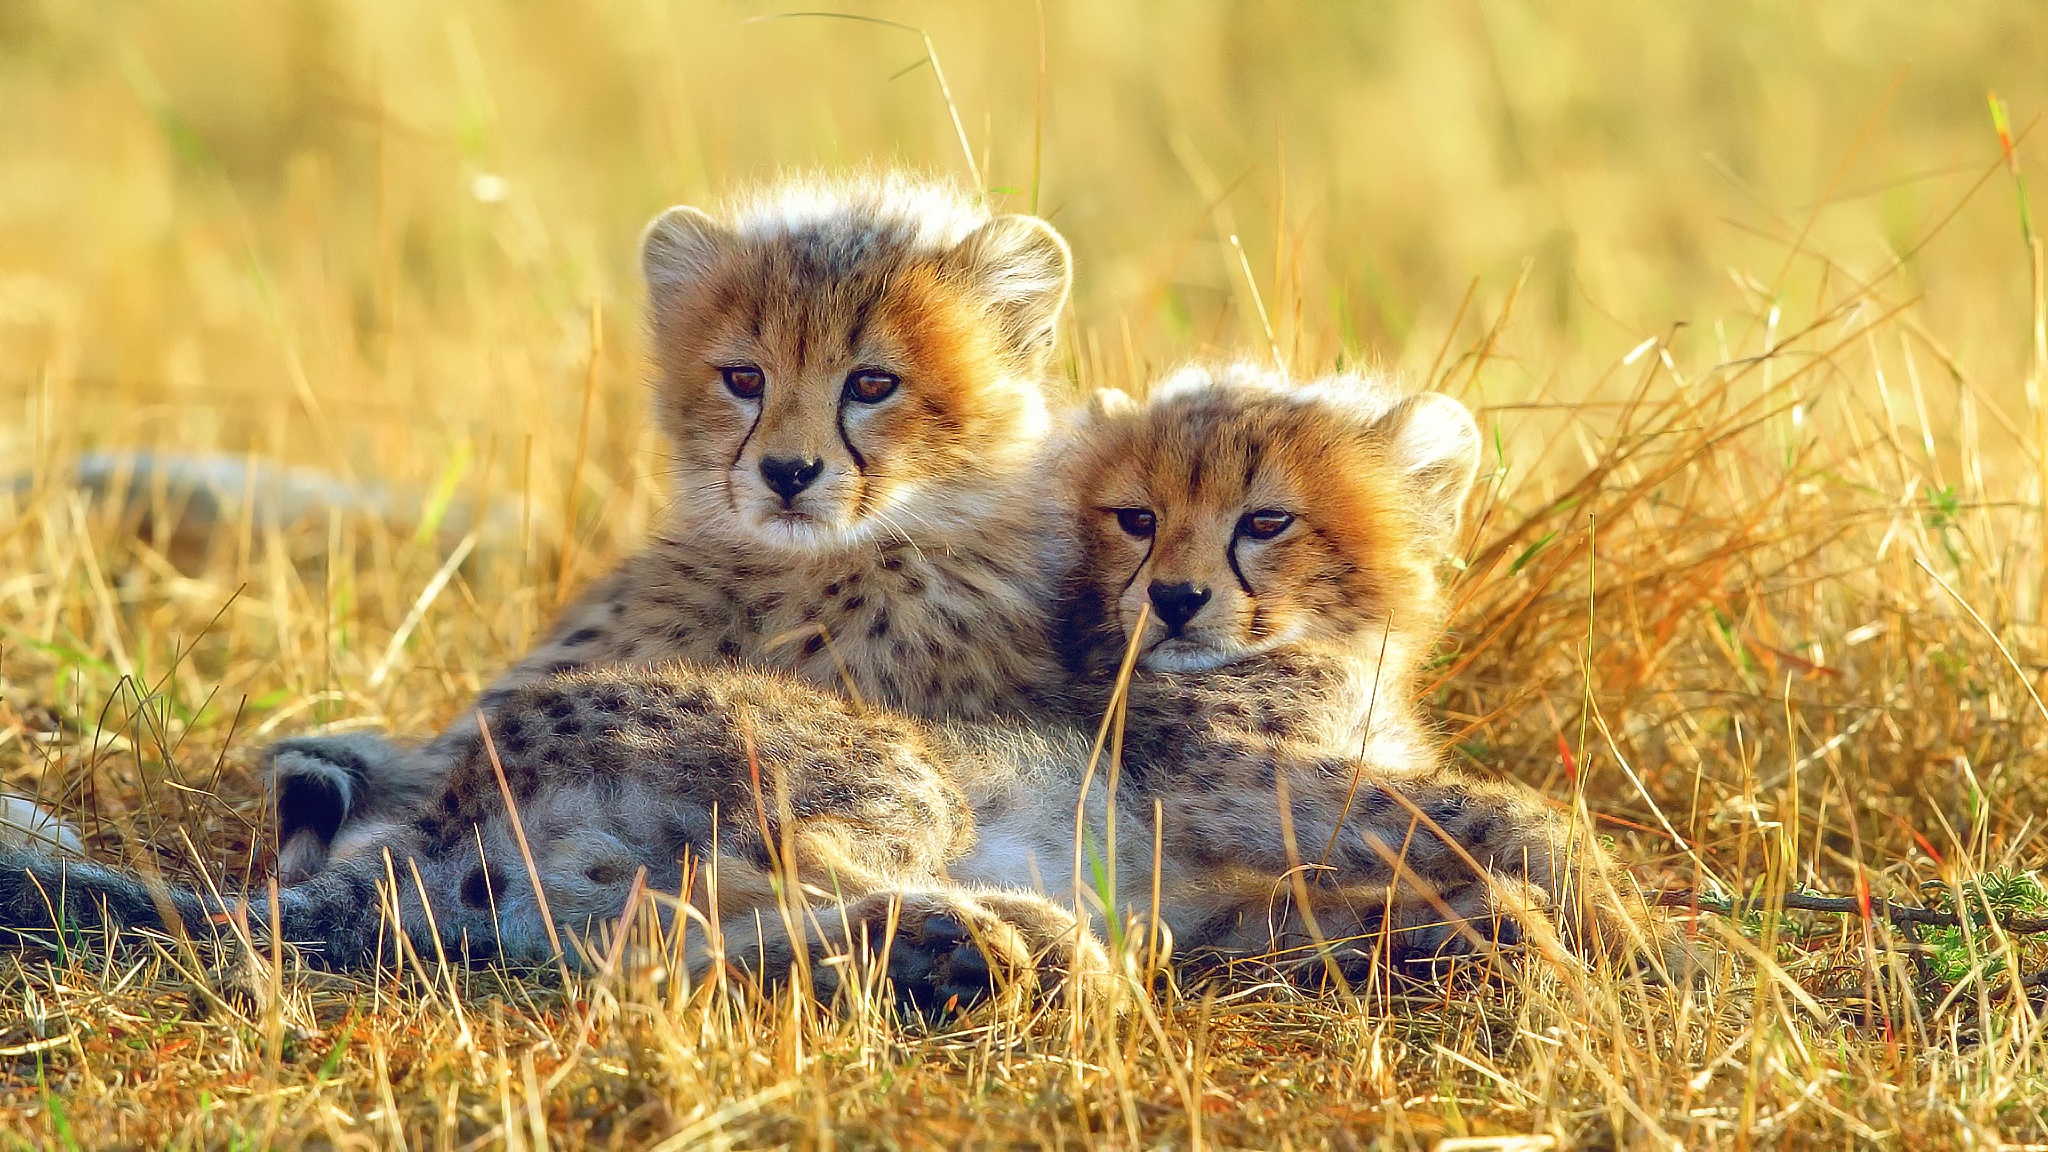 cub, cheetah, animal, baby animal, grass, cats